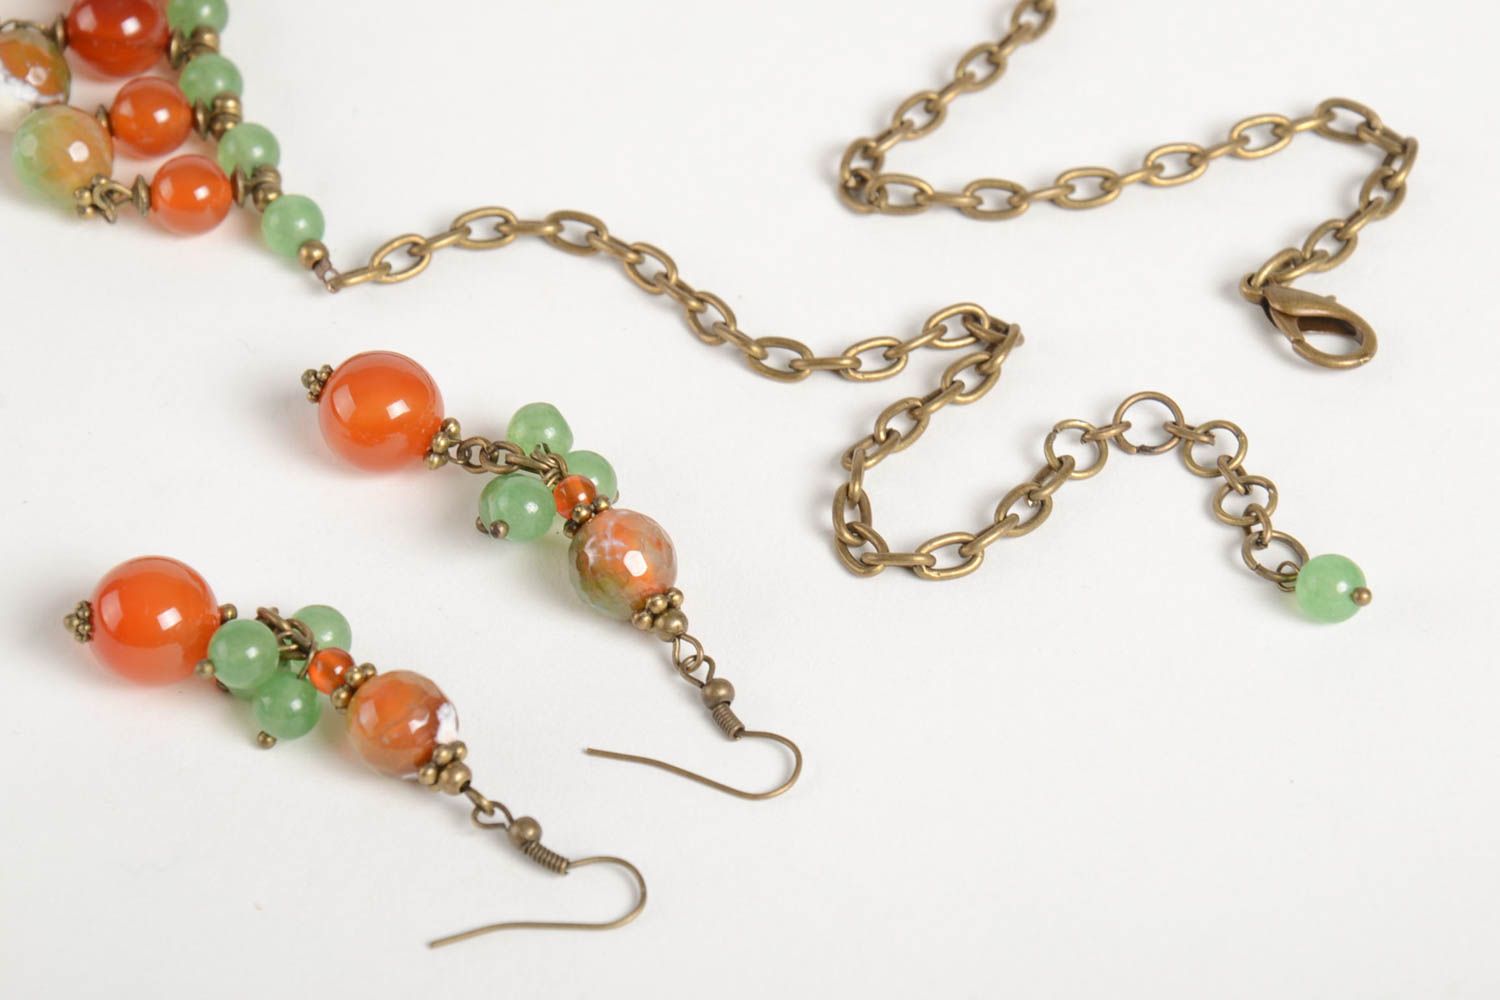 Handmade natural stone jewelry designer tender necklace elegant earrings photo 4